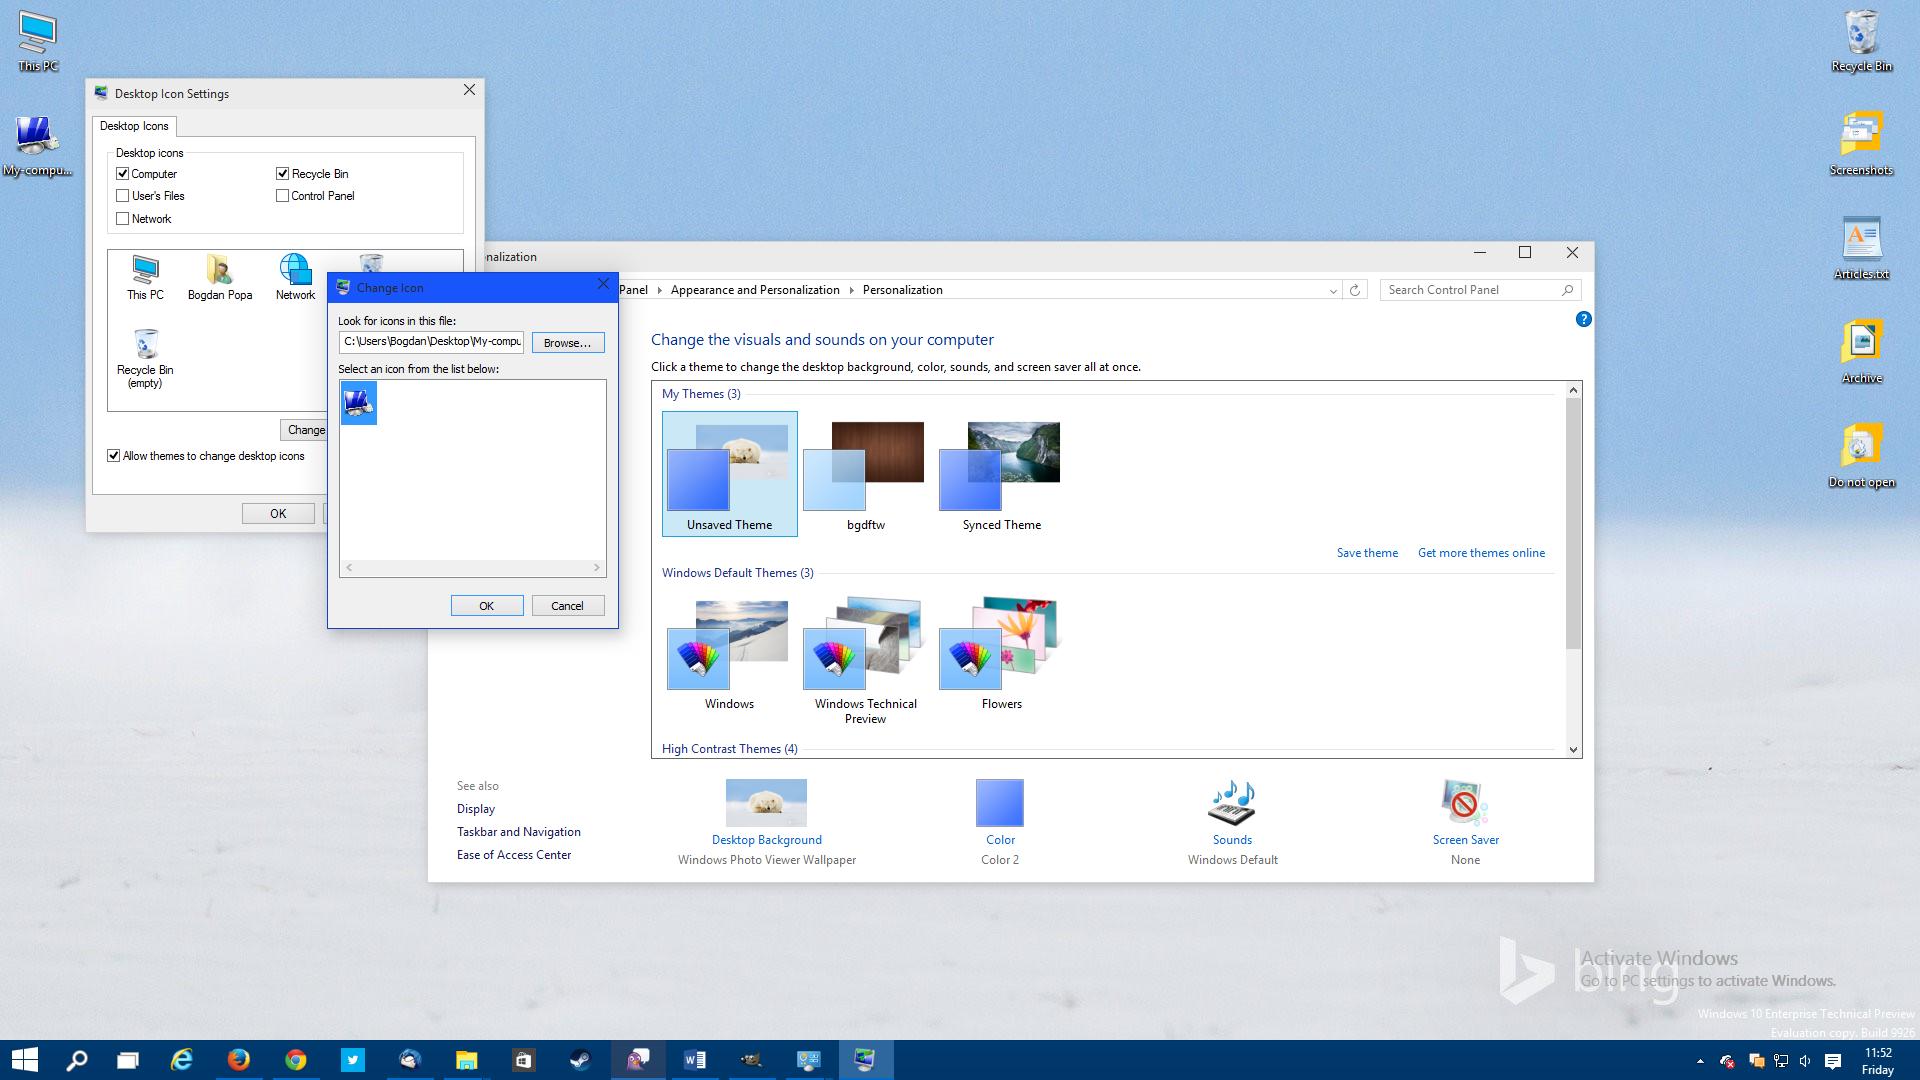 program folder icon changer windows 10